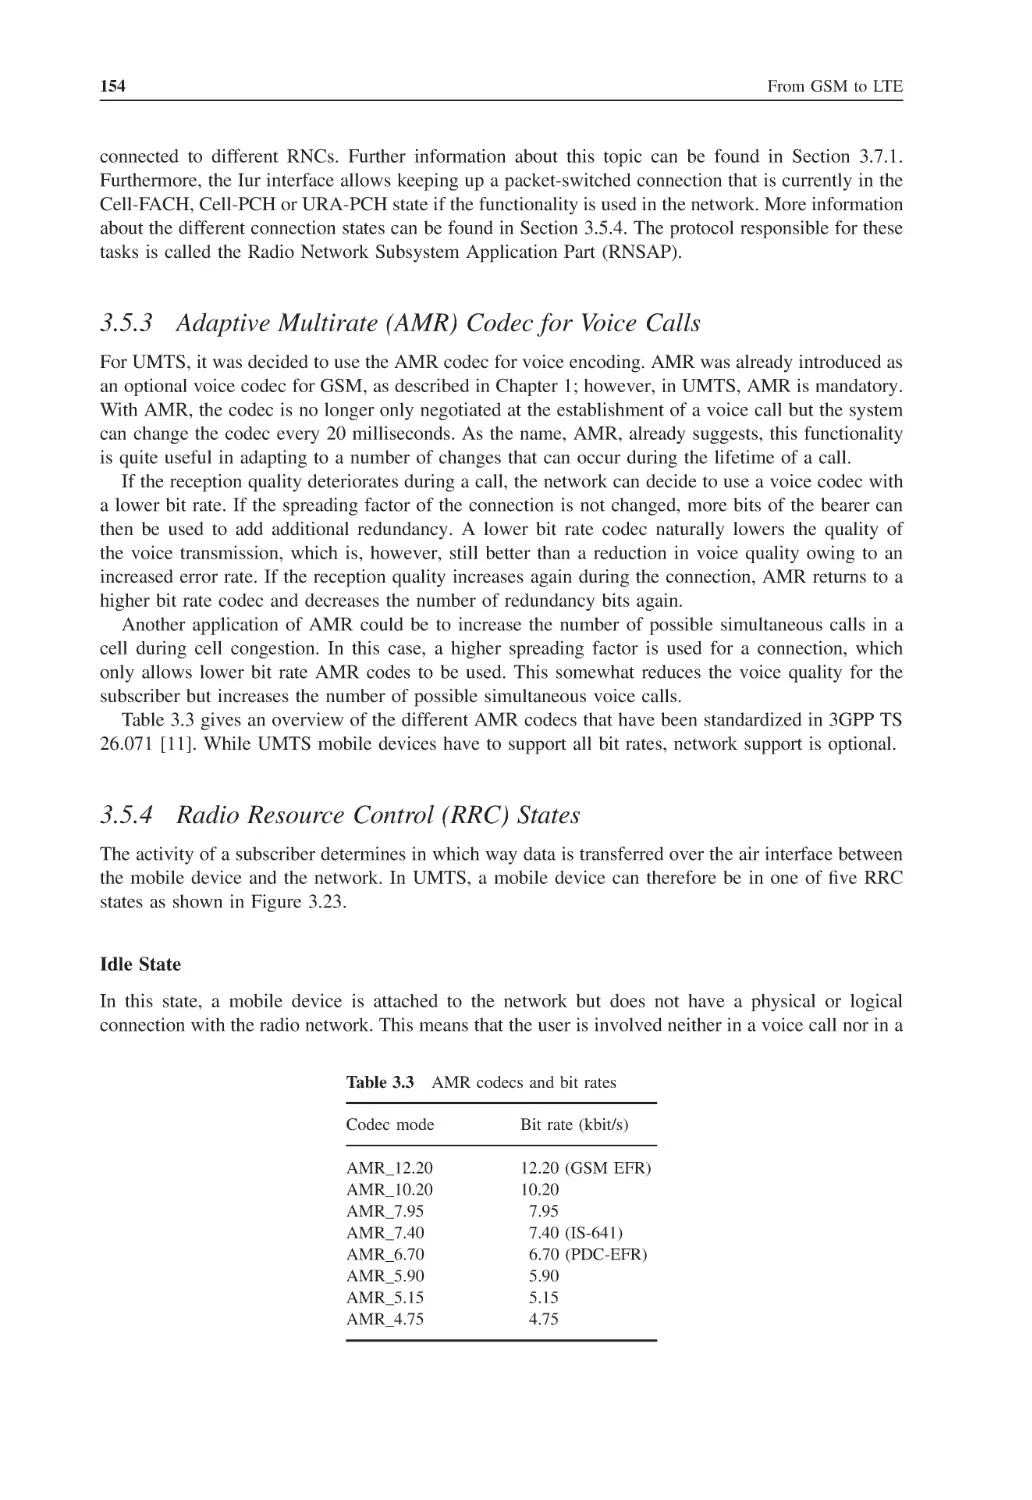 3.5.3 Adaptive Multirate (AMR) Codec for Voice Calls
3.5.4 Radio Resource Control (RRC) States